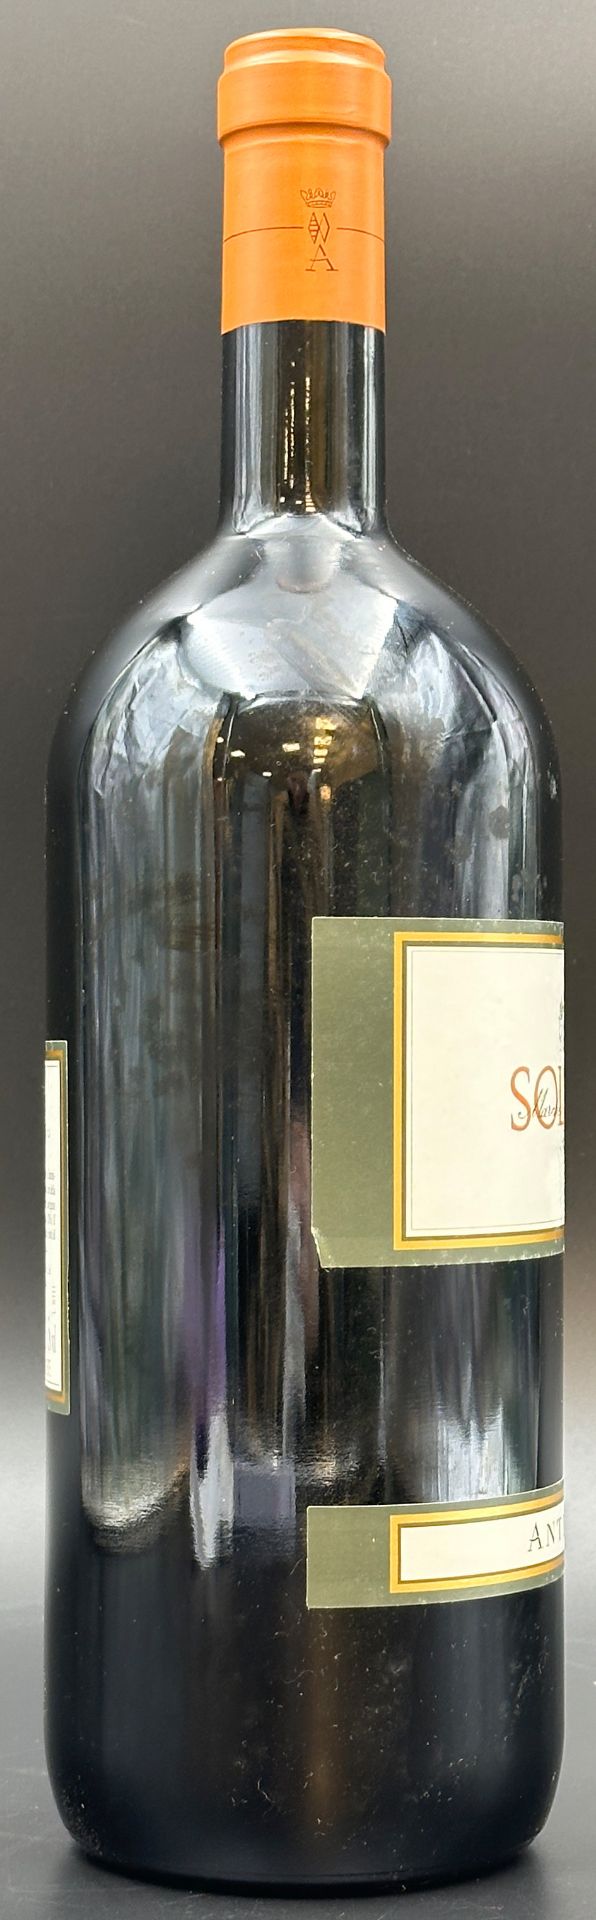 SOLAIA. Marchesi Antinori. 1 magnum bottle of red wine. 1998. - Image 5 of 11